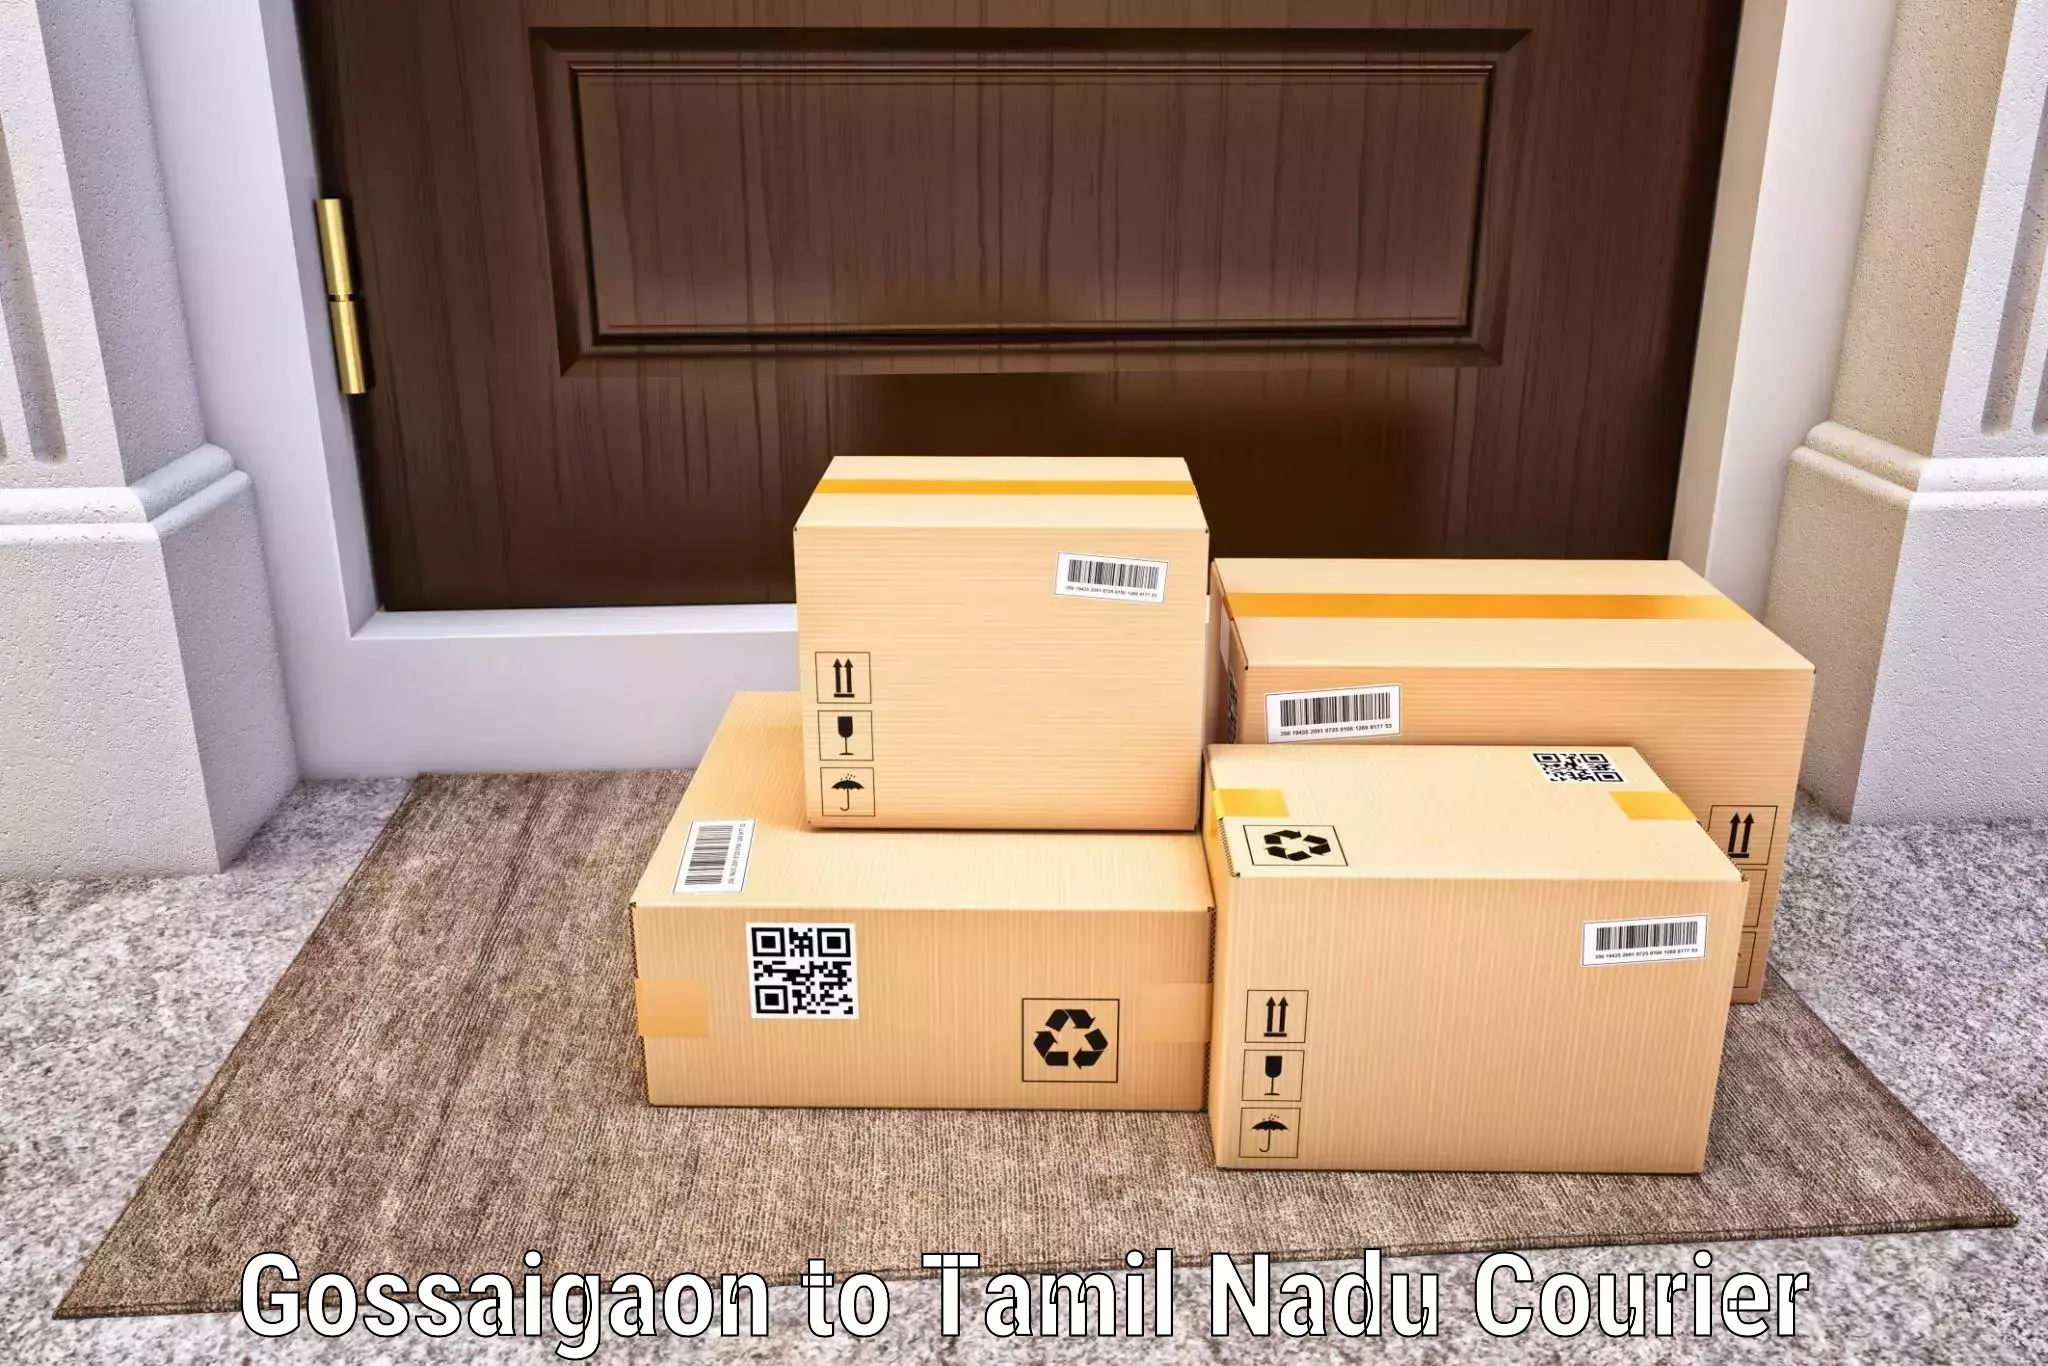 Advanced parcel tracking Gossaigaon to Velur